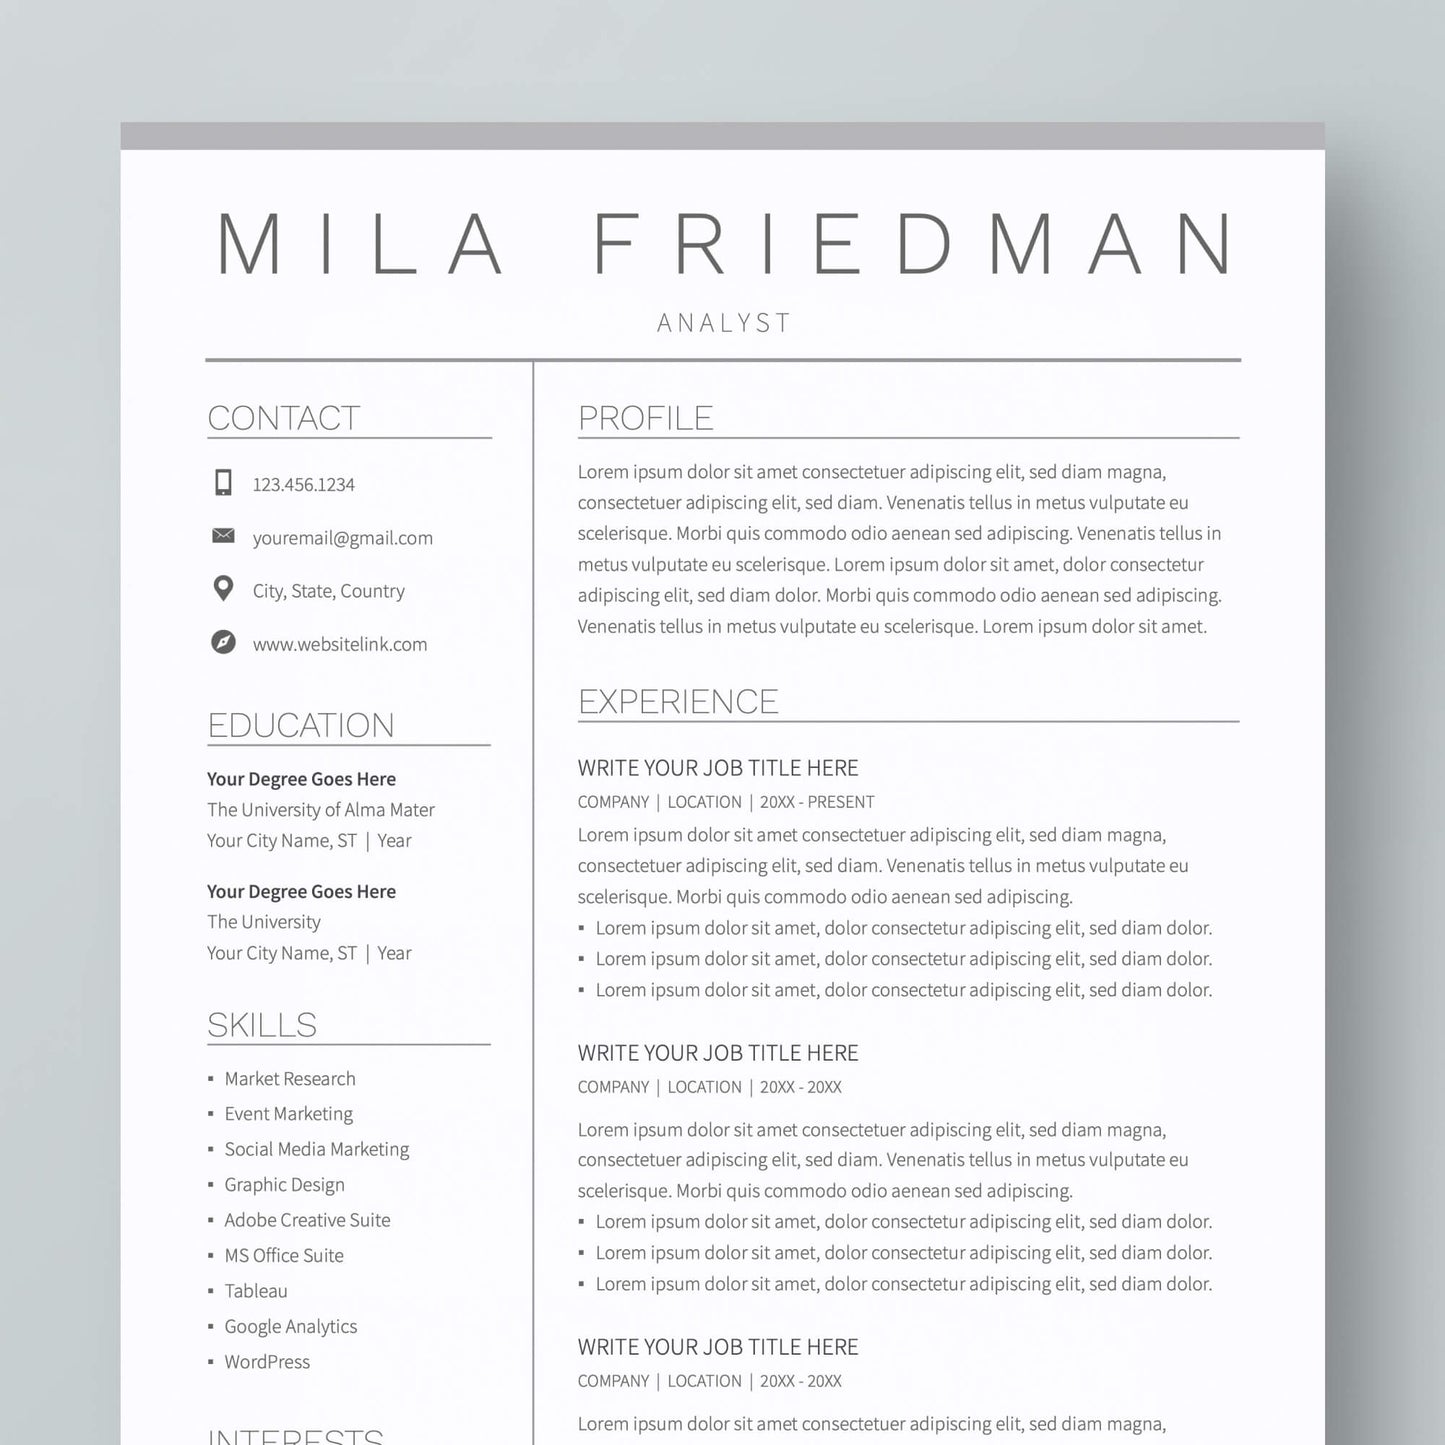 Resume Template: Mila Friedman - MioDocs